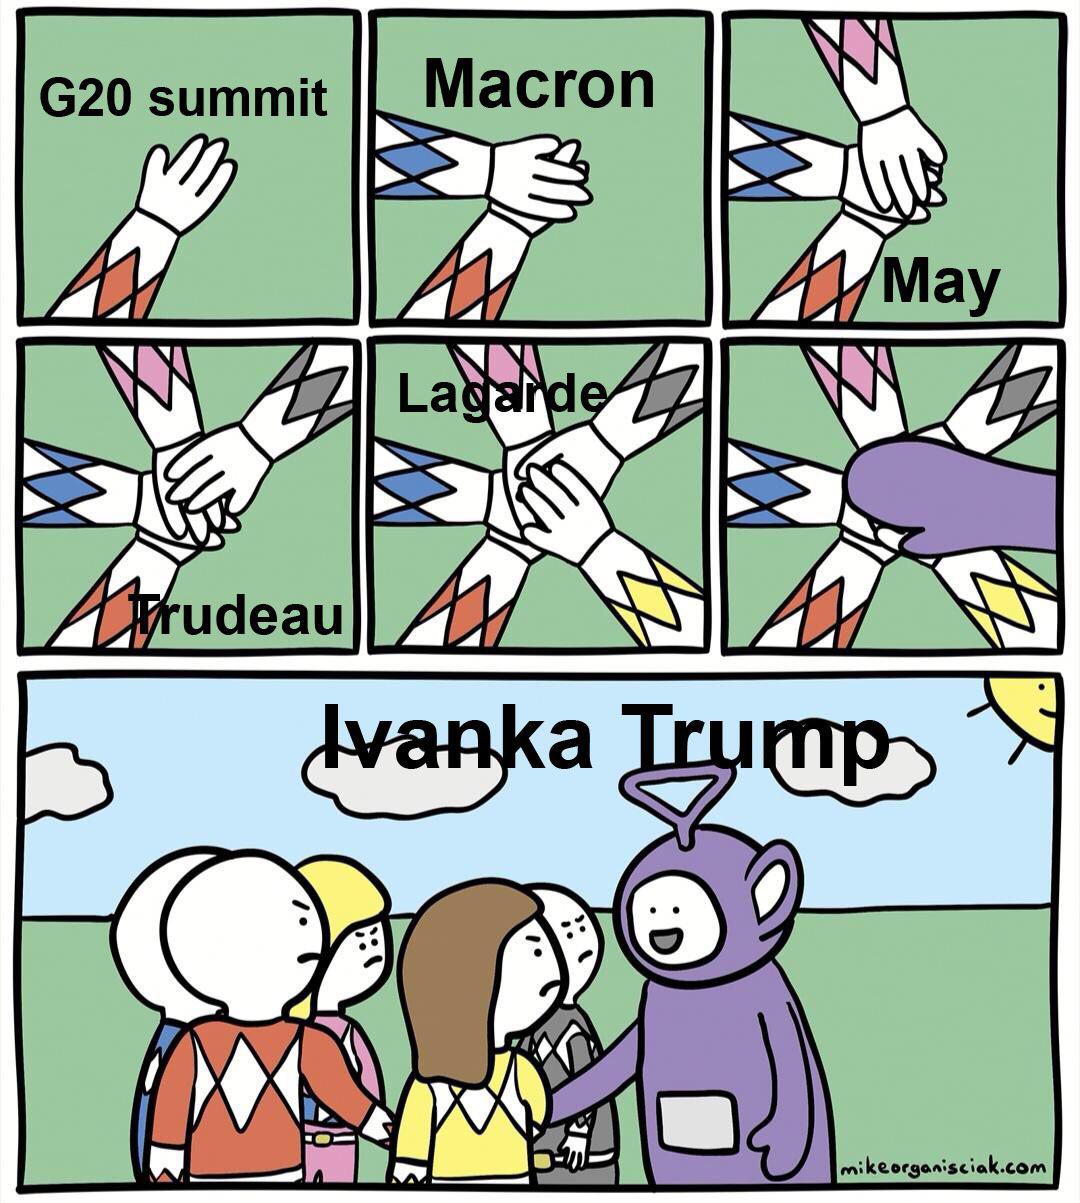 power rangers tinky winky meme - G20 summit Il Macron Jvanka Trump mikeorganisciak.com